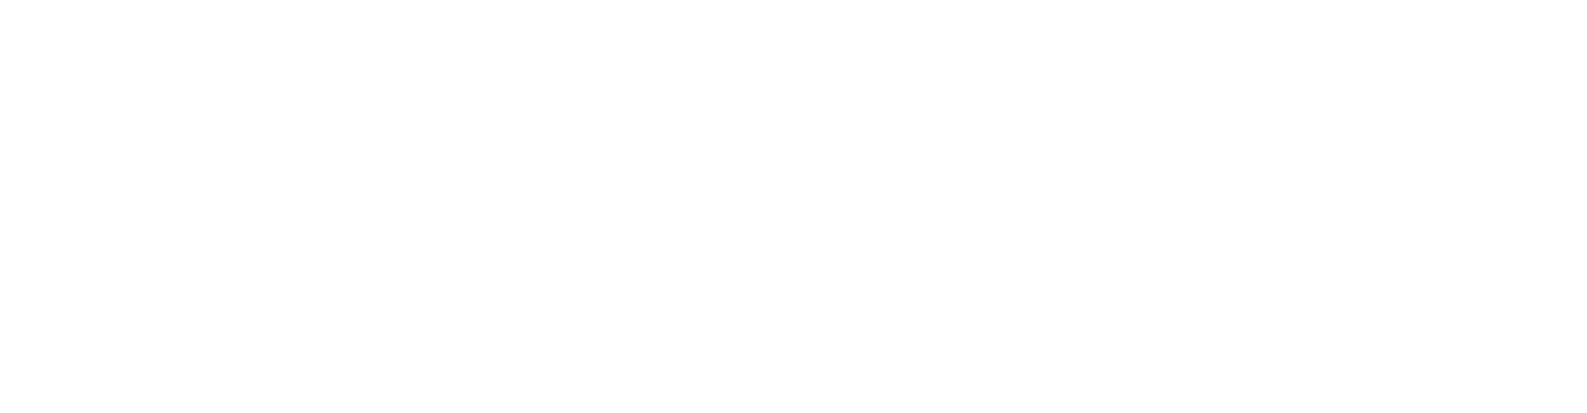 POSCO logo grand pour les fonds sombres (PNG transparent)